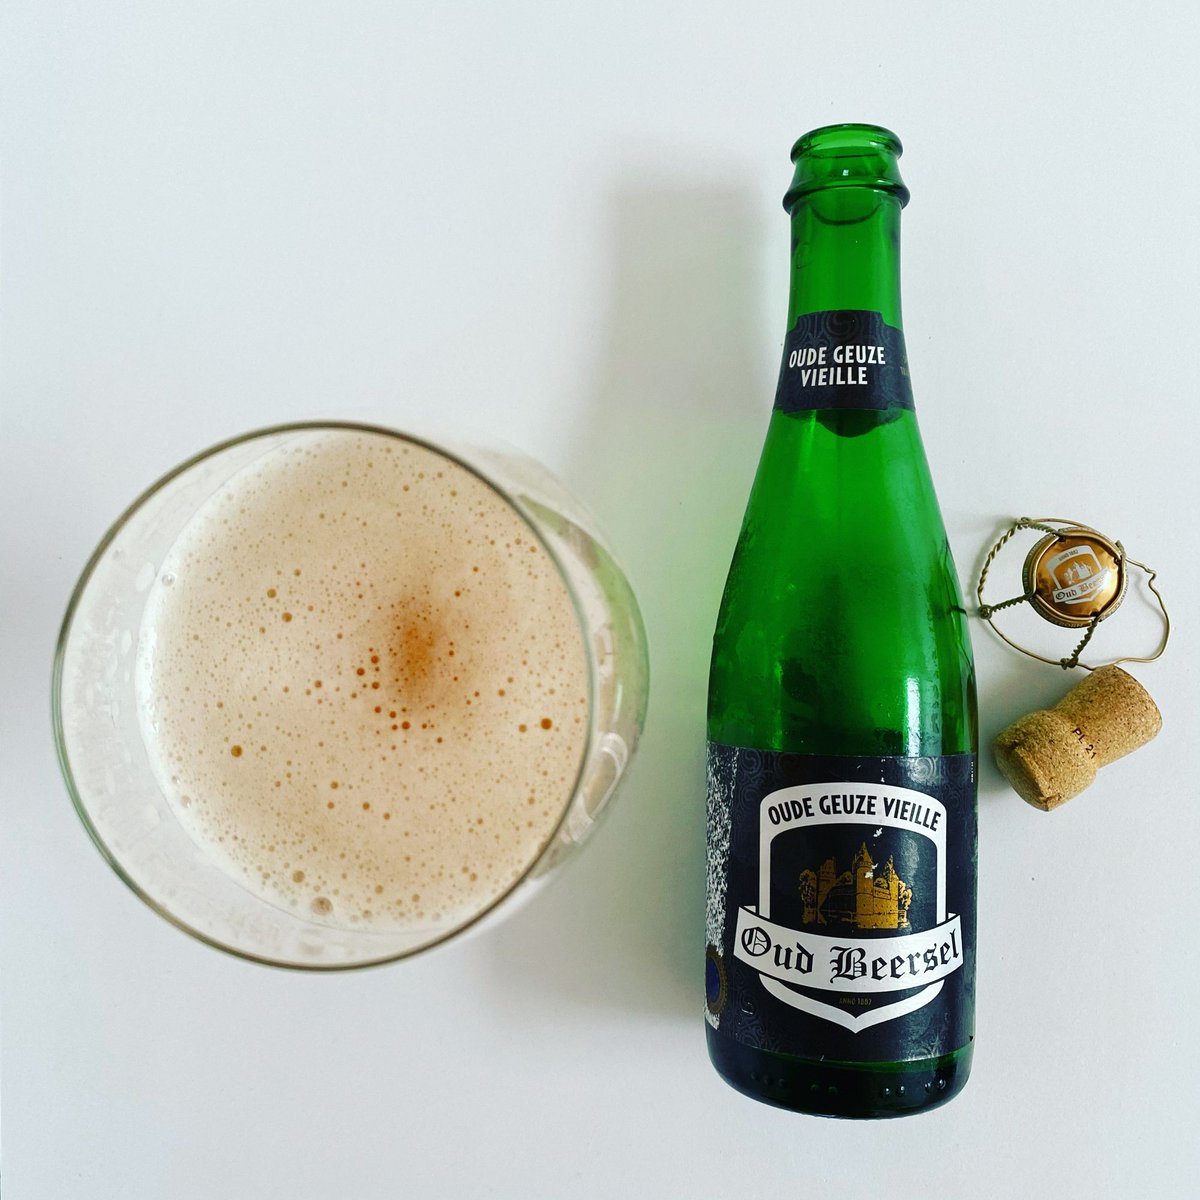 La Cerveza del Viernes en YouTube, Oude Geuze Vieille by @OudBeersel youtu.be/Ohg2AcxBWm0?si…